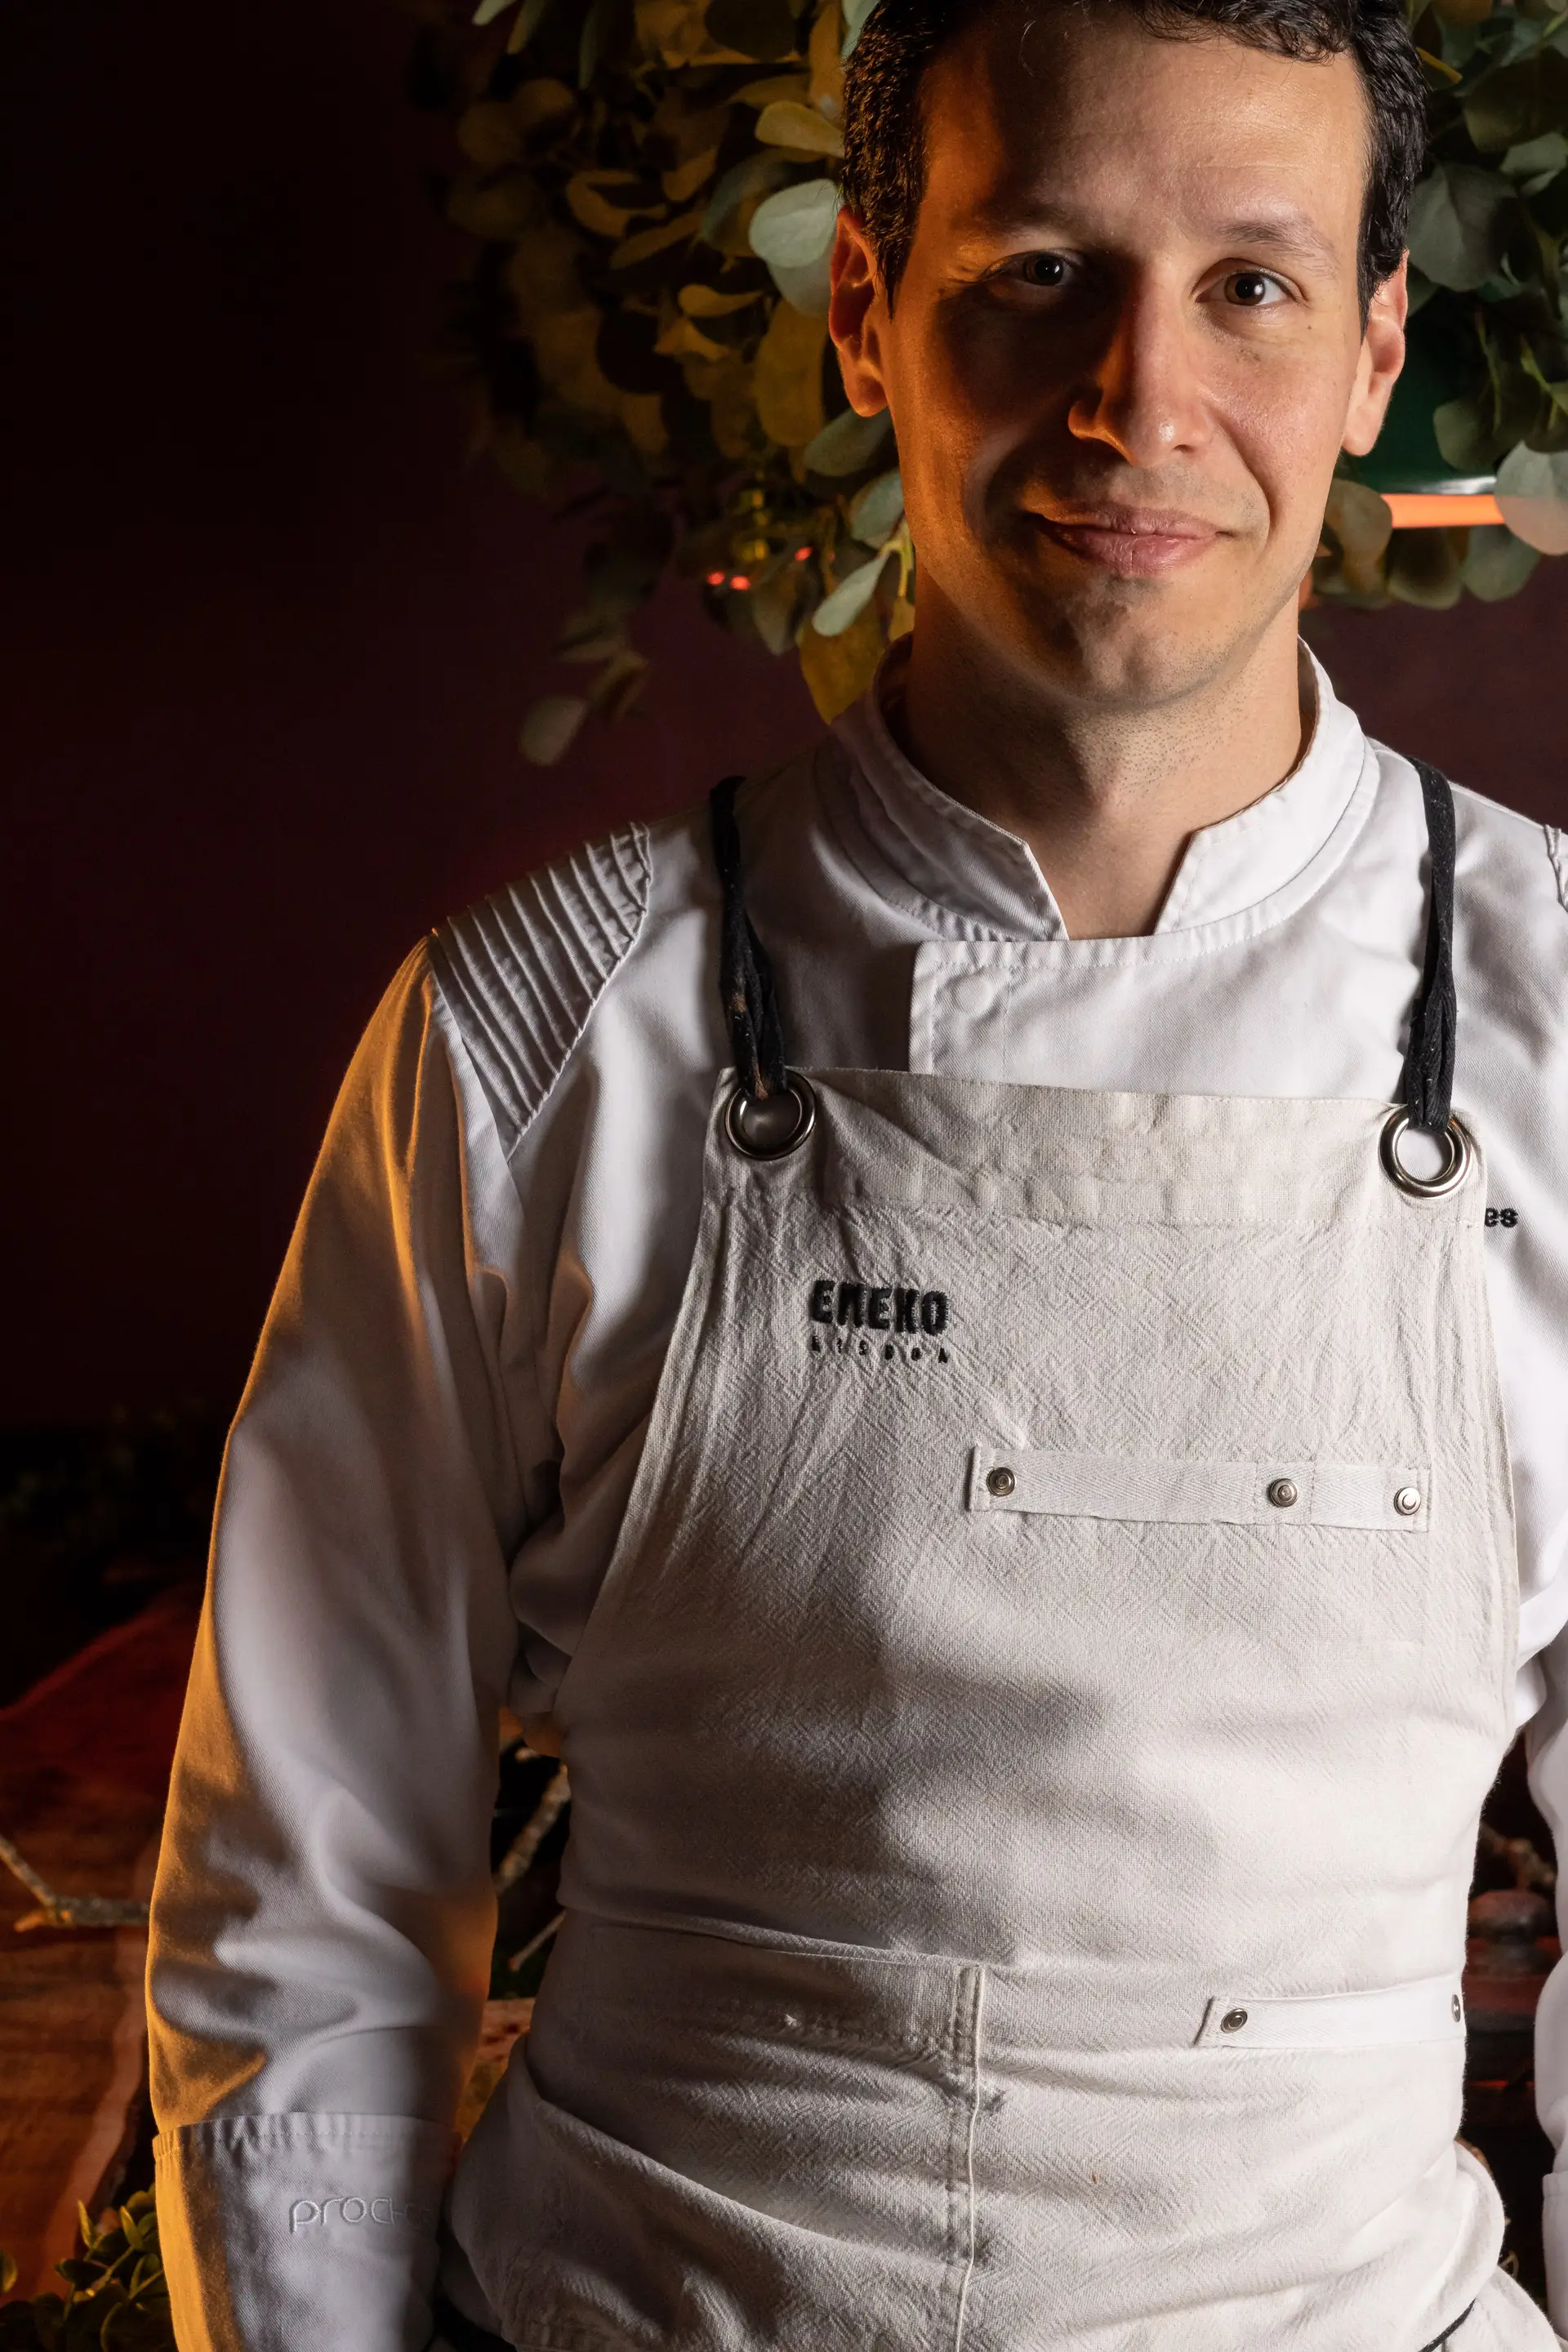 Eneko Lisboa - Chef Lucas Bernardes